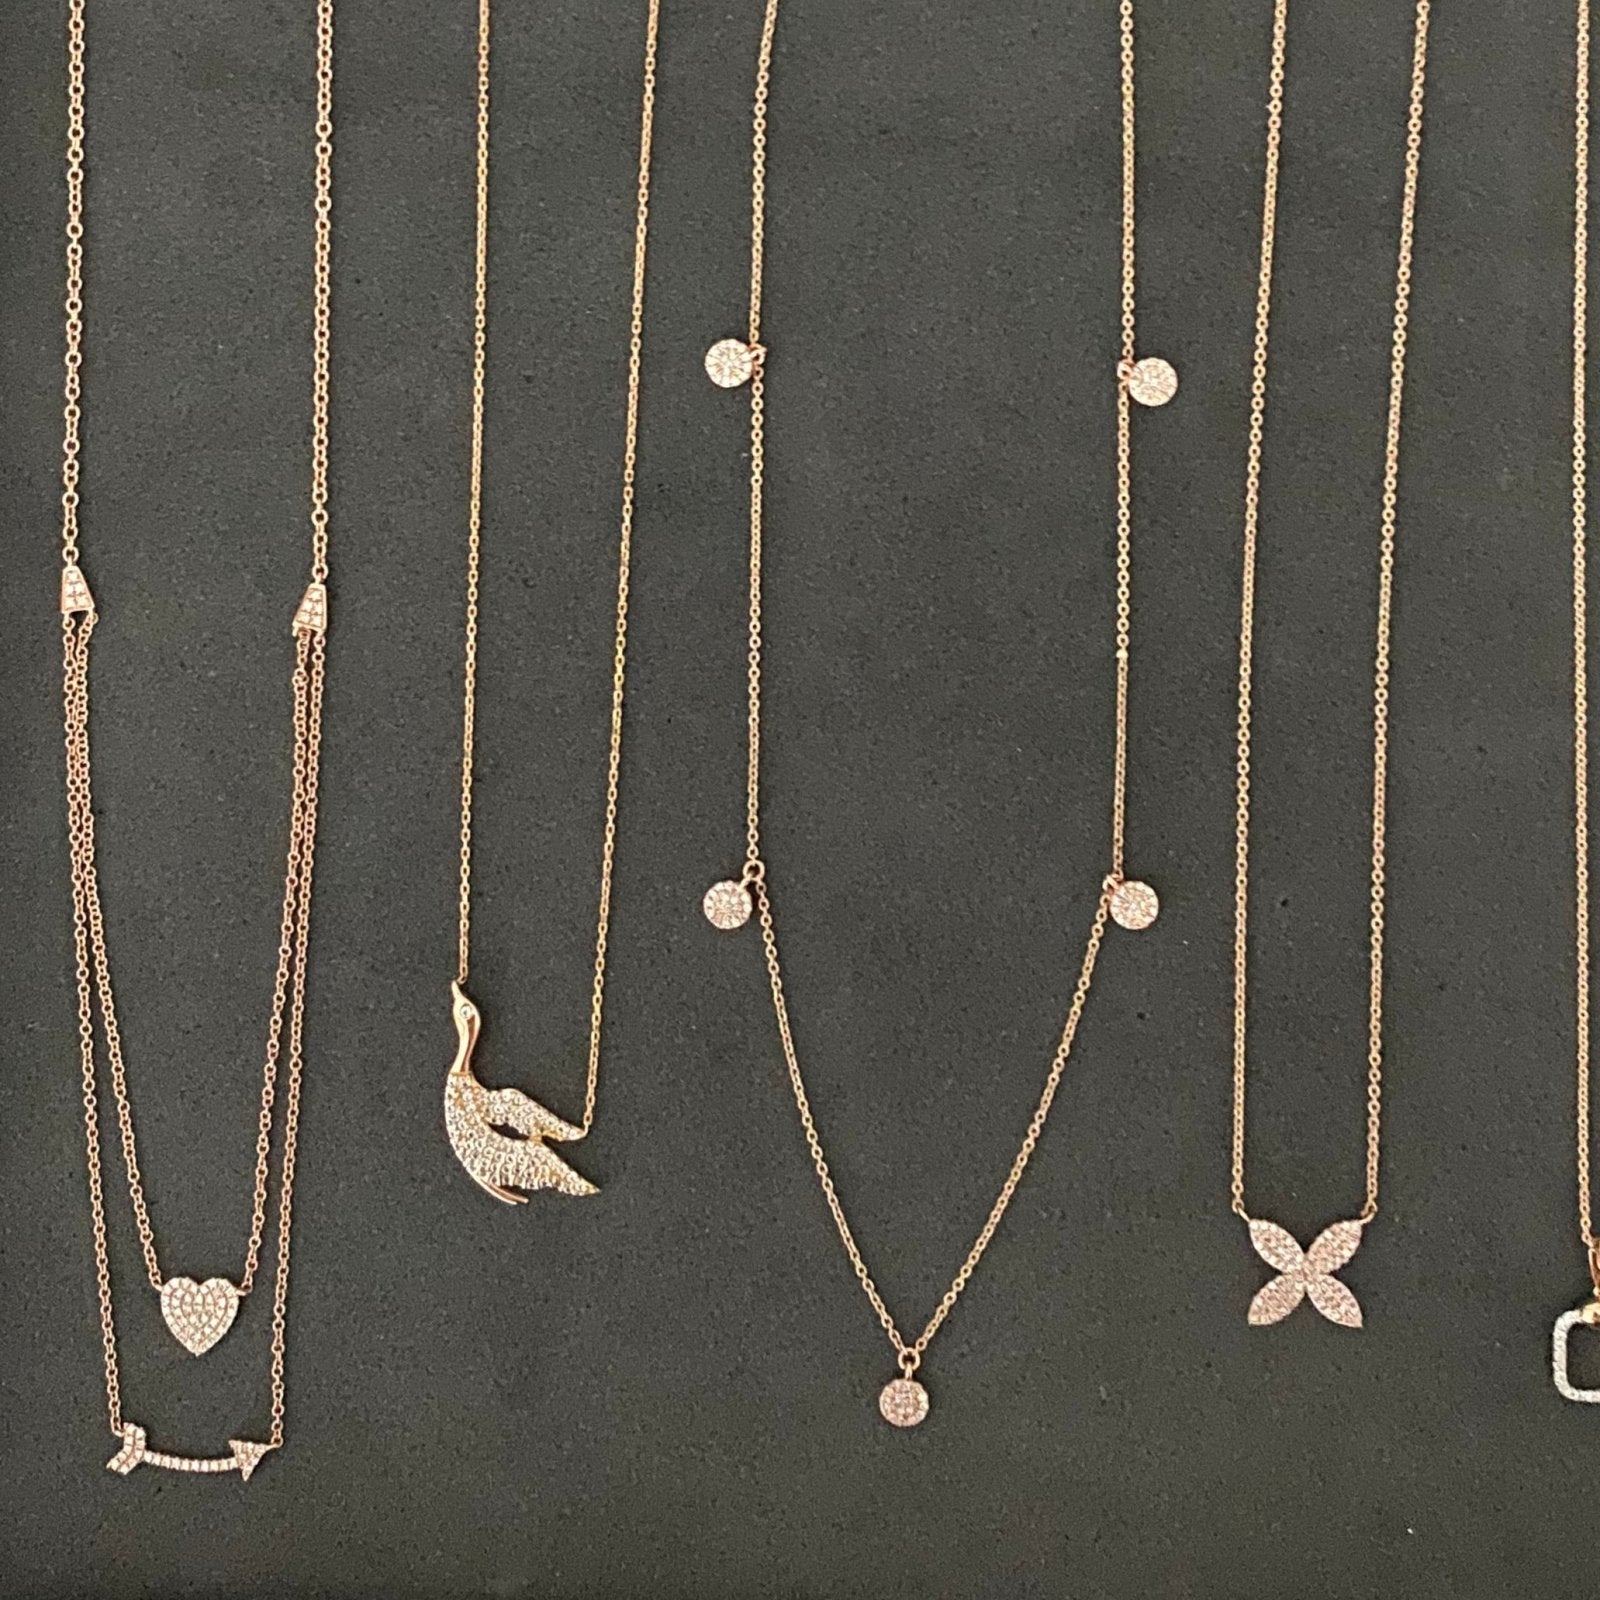 Sapphire Pave Swan Necklace Necklaces Estella Collection #product_description# 14k Birthstone Gemstone #tag4# #tag5# #tag6# #tag7# #tag8# #tag9# #tag10#